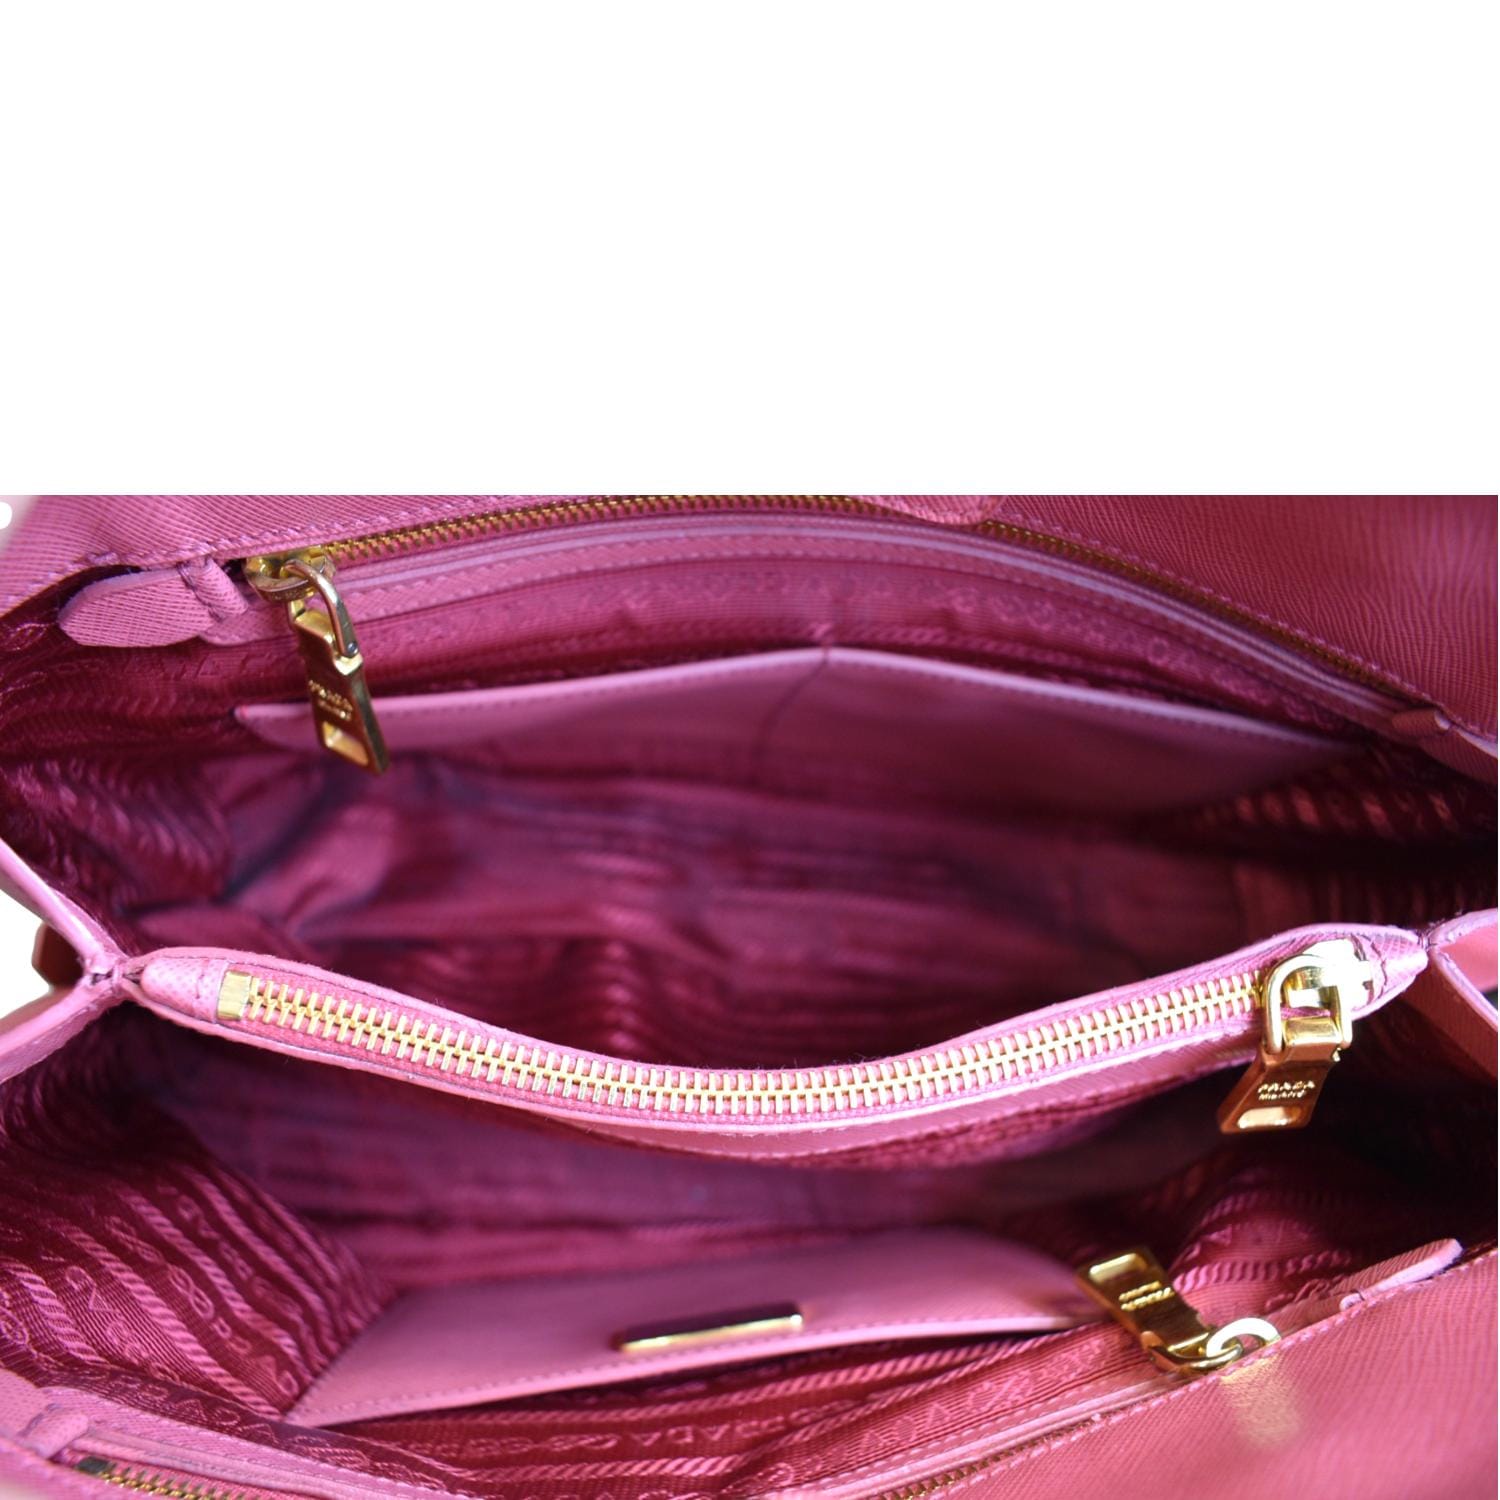 Prada Promenade Bag Saffiano Leather Small Pink 17771622